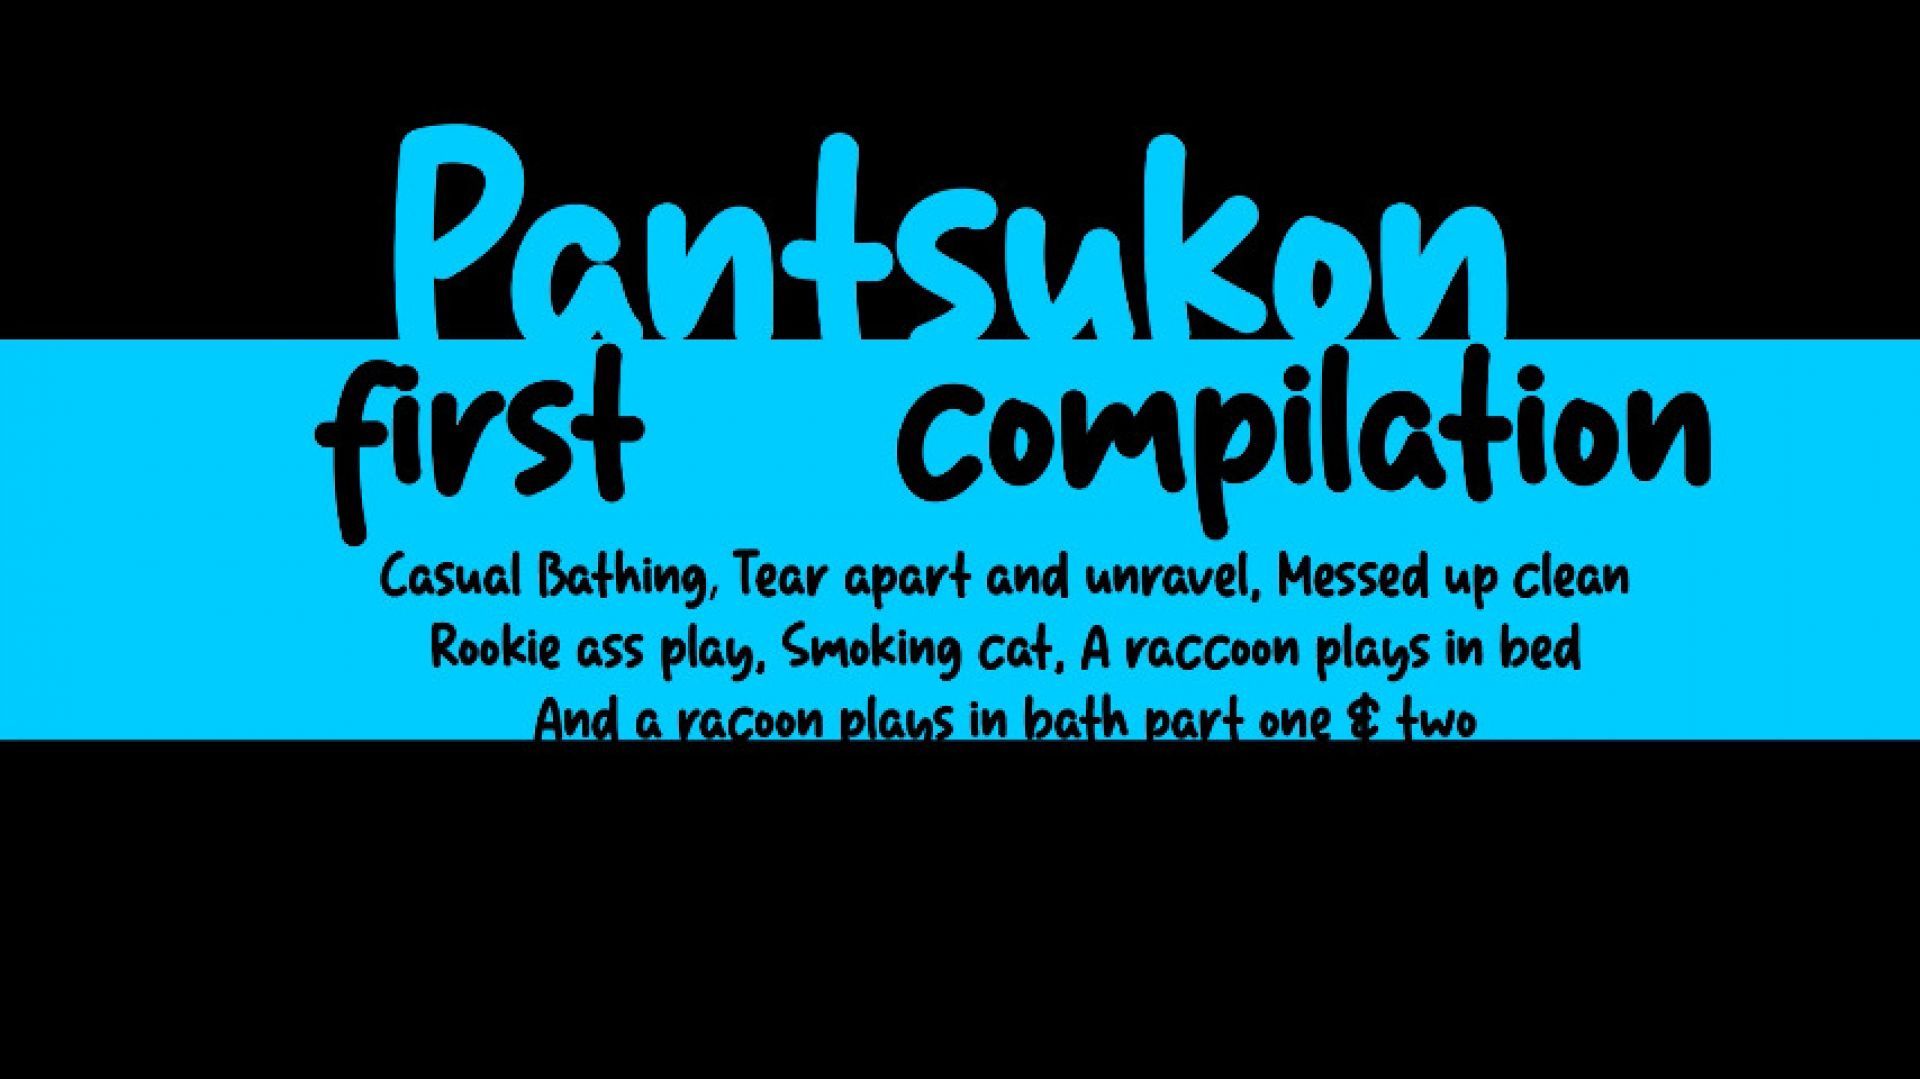 Pantsukon's first compilation